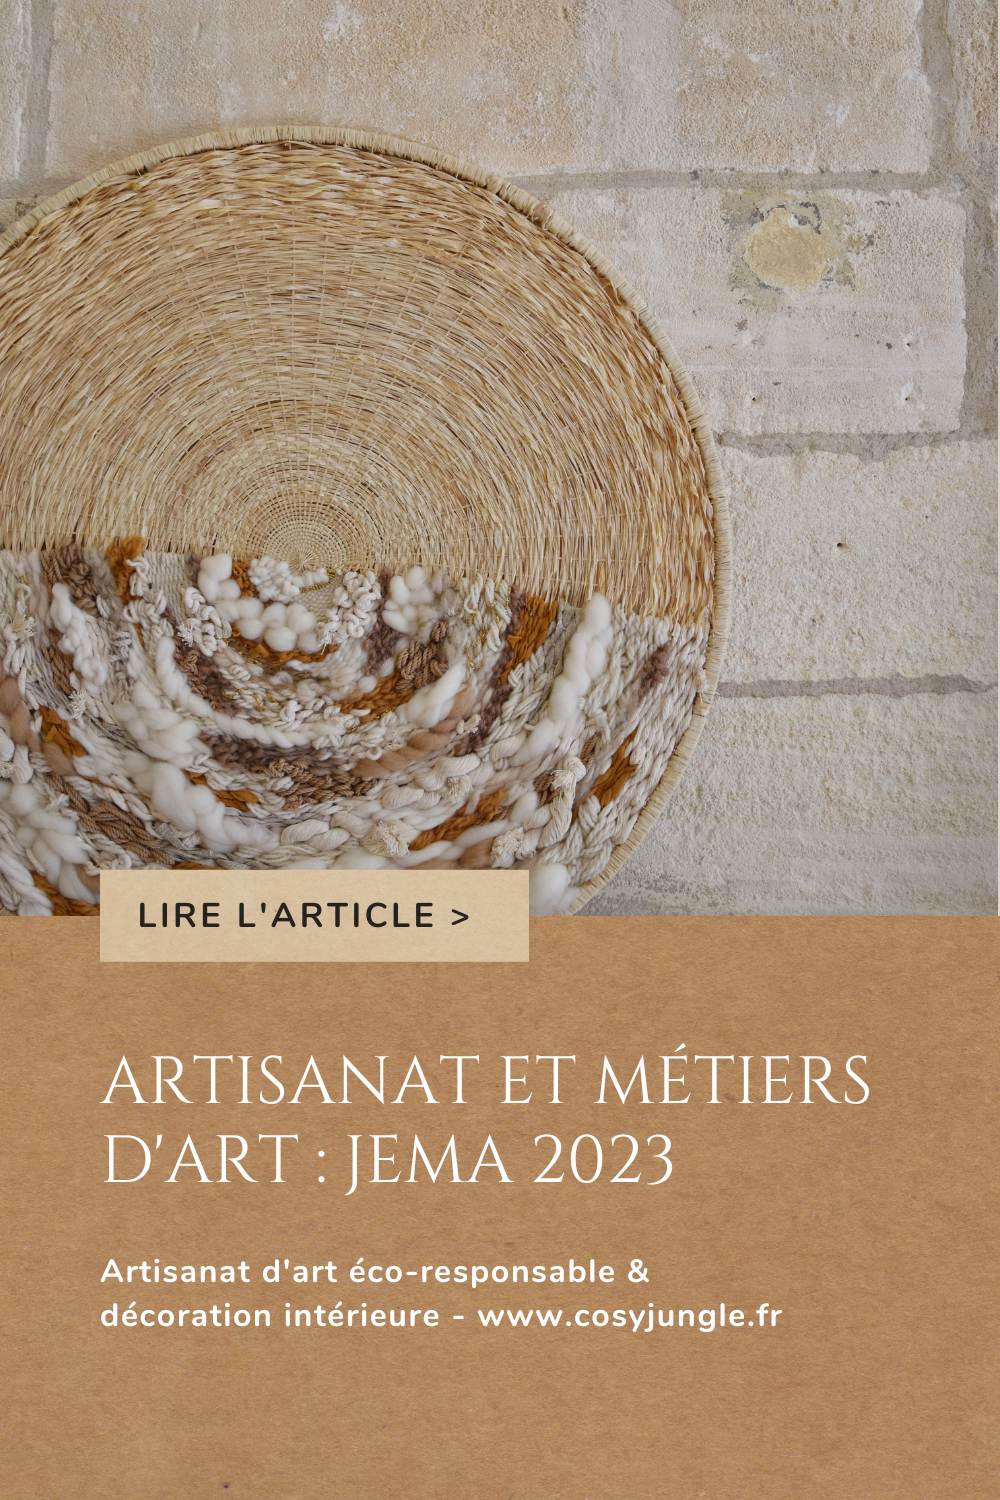 Artisanat et métiers d’art : jema 2023